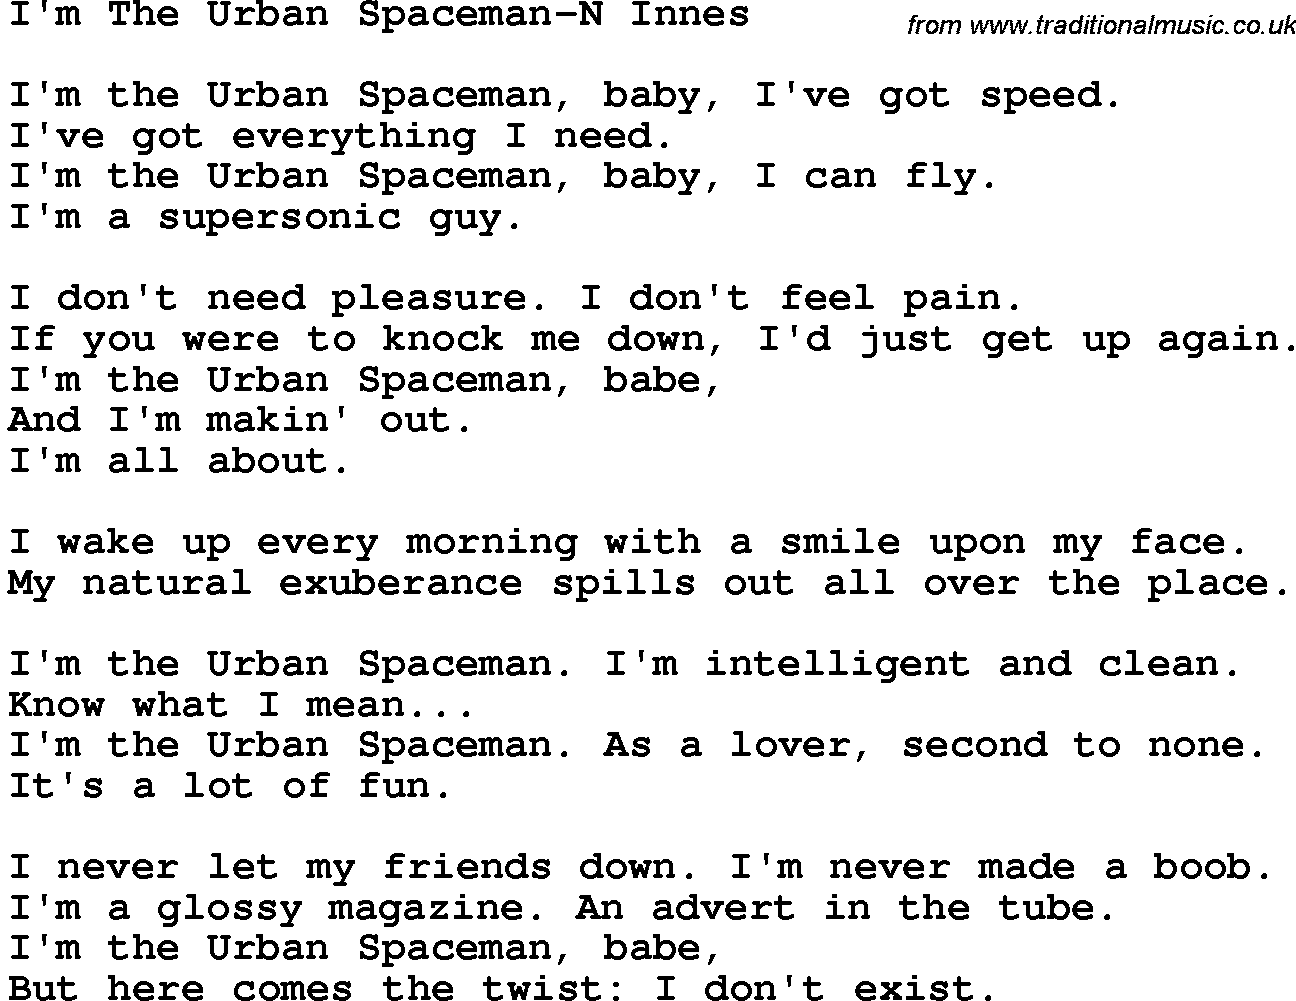 Novelty song: I'm The Urban Spaceman-N Innes lyrics